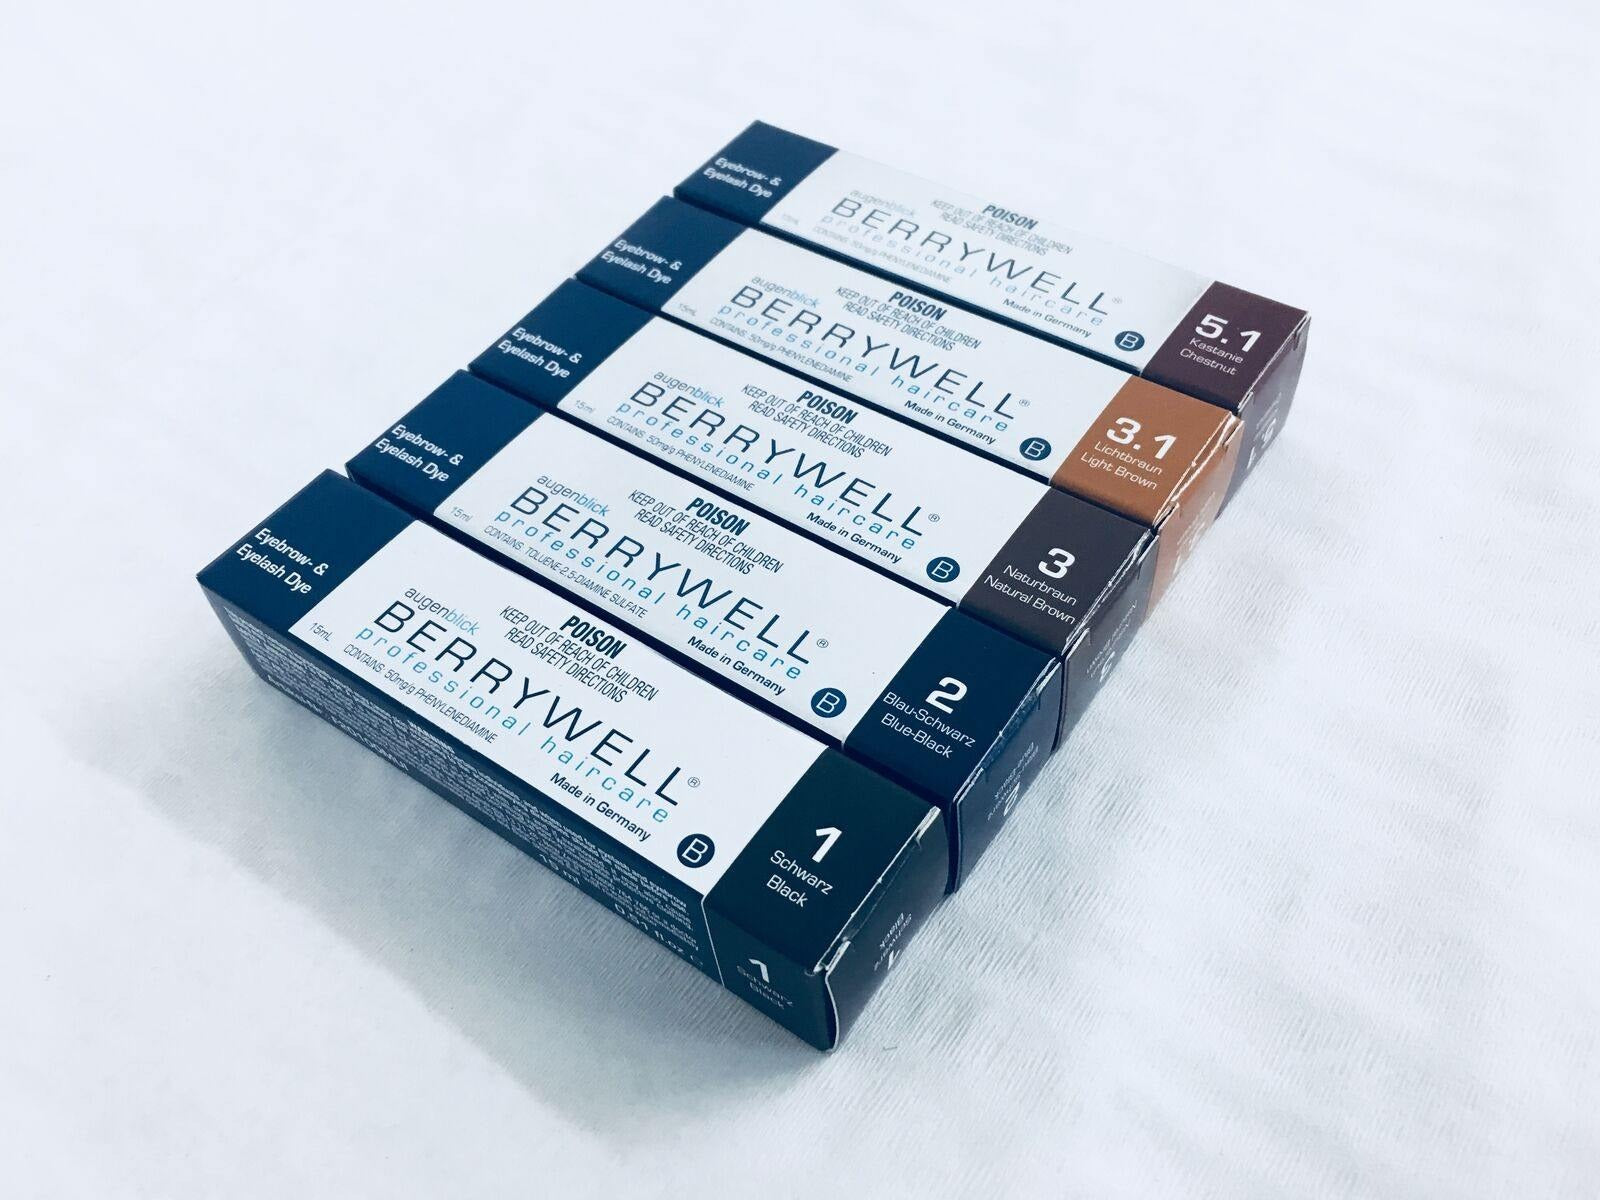 Berrywell Eyelash & Eyebrow Tint 15ml - 3.1 Light Brown